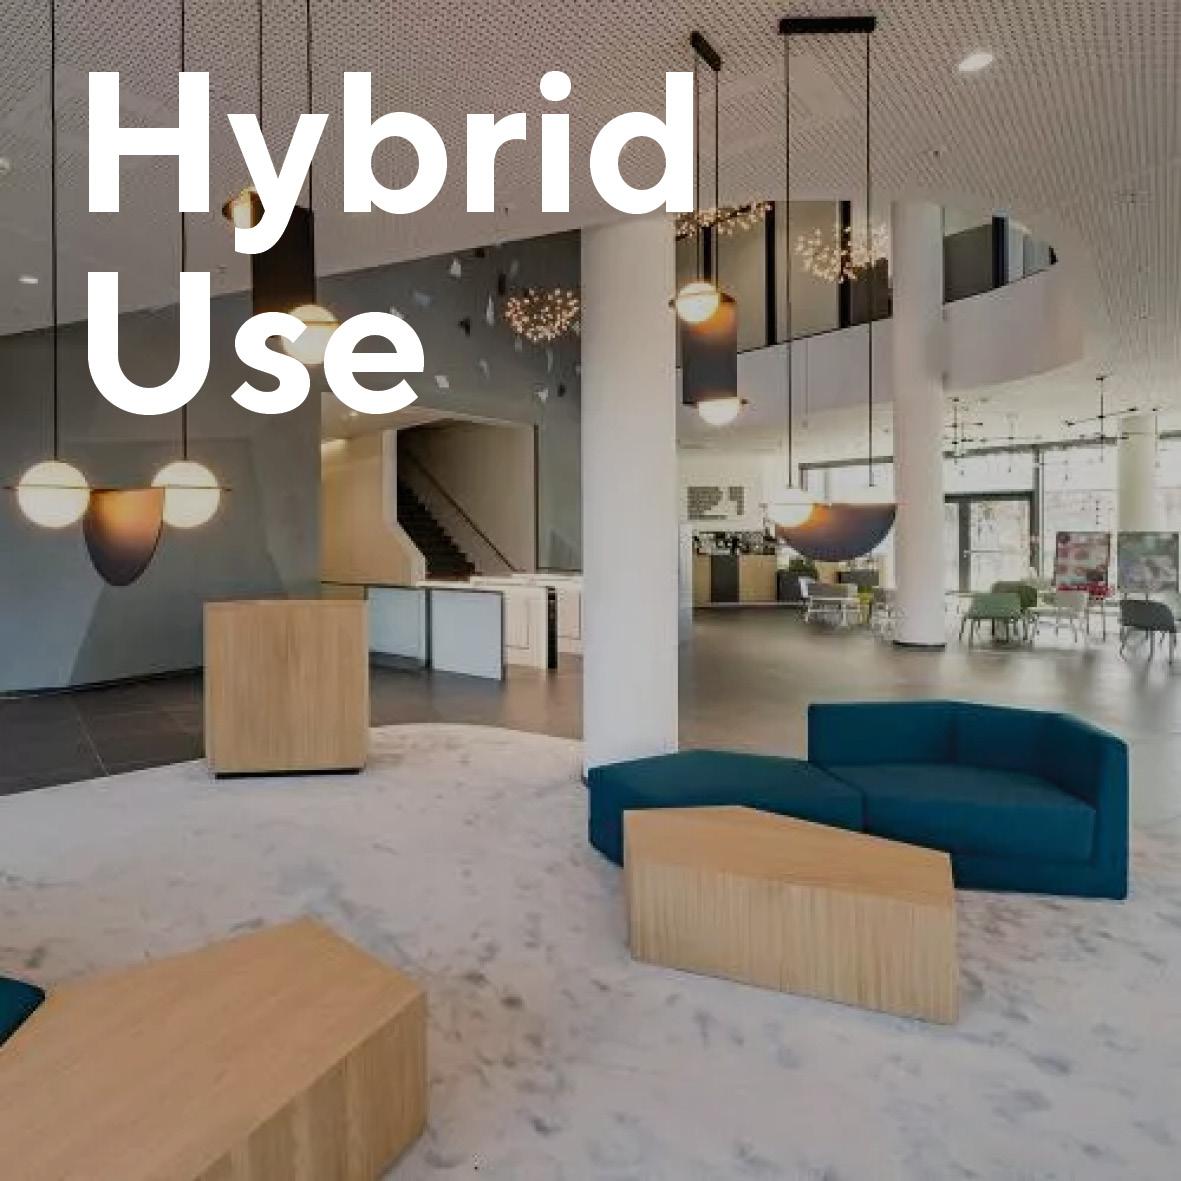 Hybrid Use